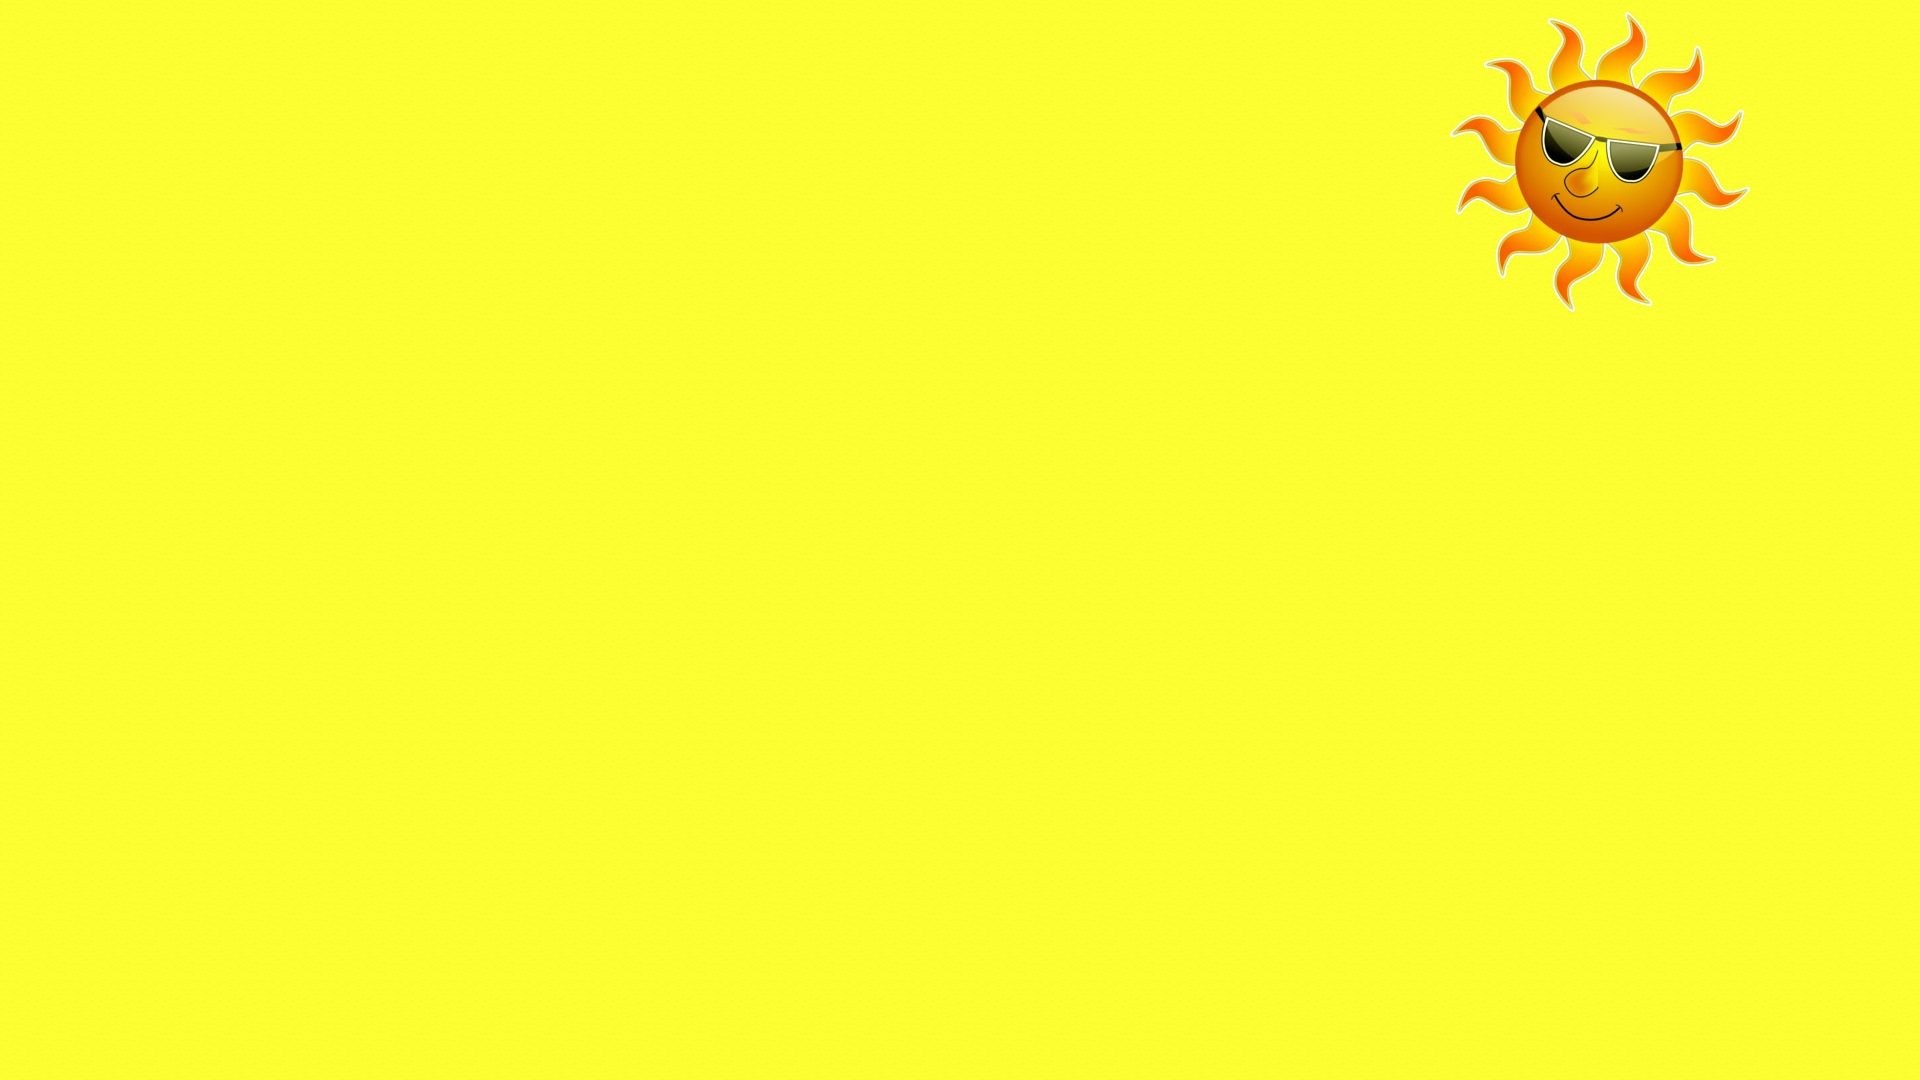 1920x1080 30 best yellow aesthetic images on Pinterest | Aesthetics, Yellow .